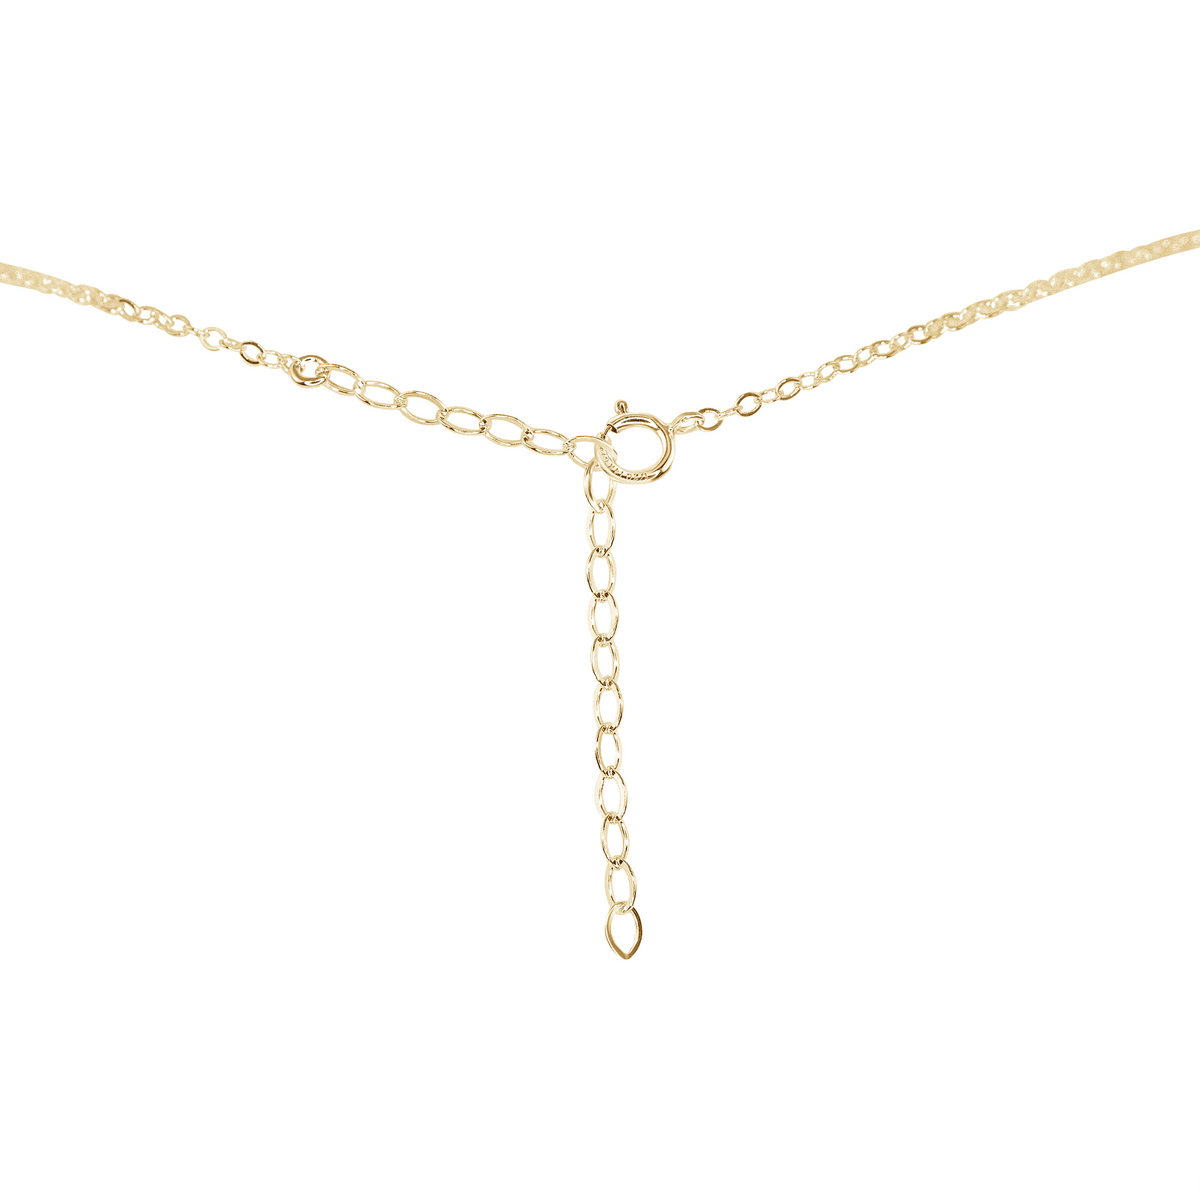 Peridot Chip Bead Bar Necklace - Peridot Chip Bead Bar Necklace - 14k Gold Fill - Luna Tide Handmade Crystal Jewellery